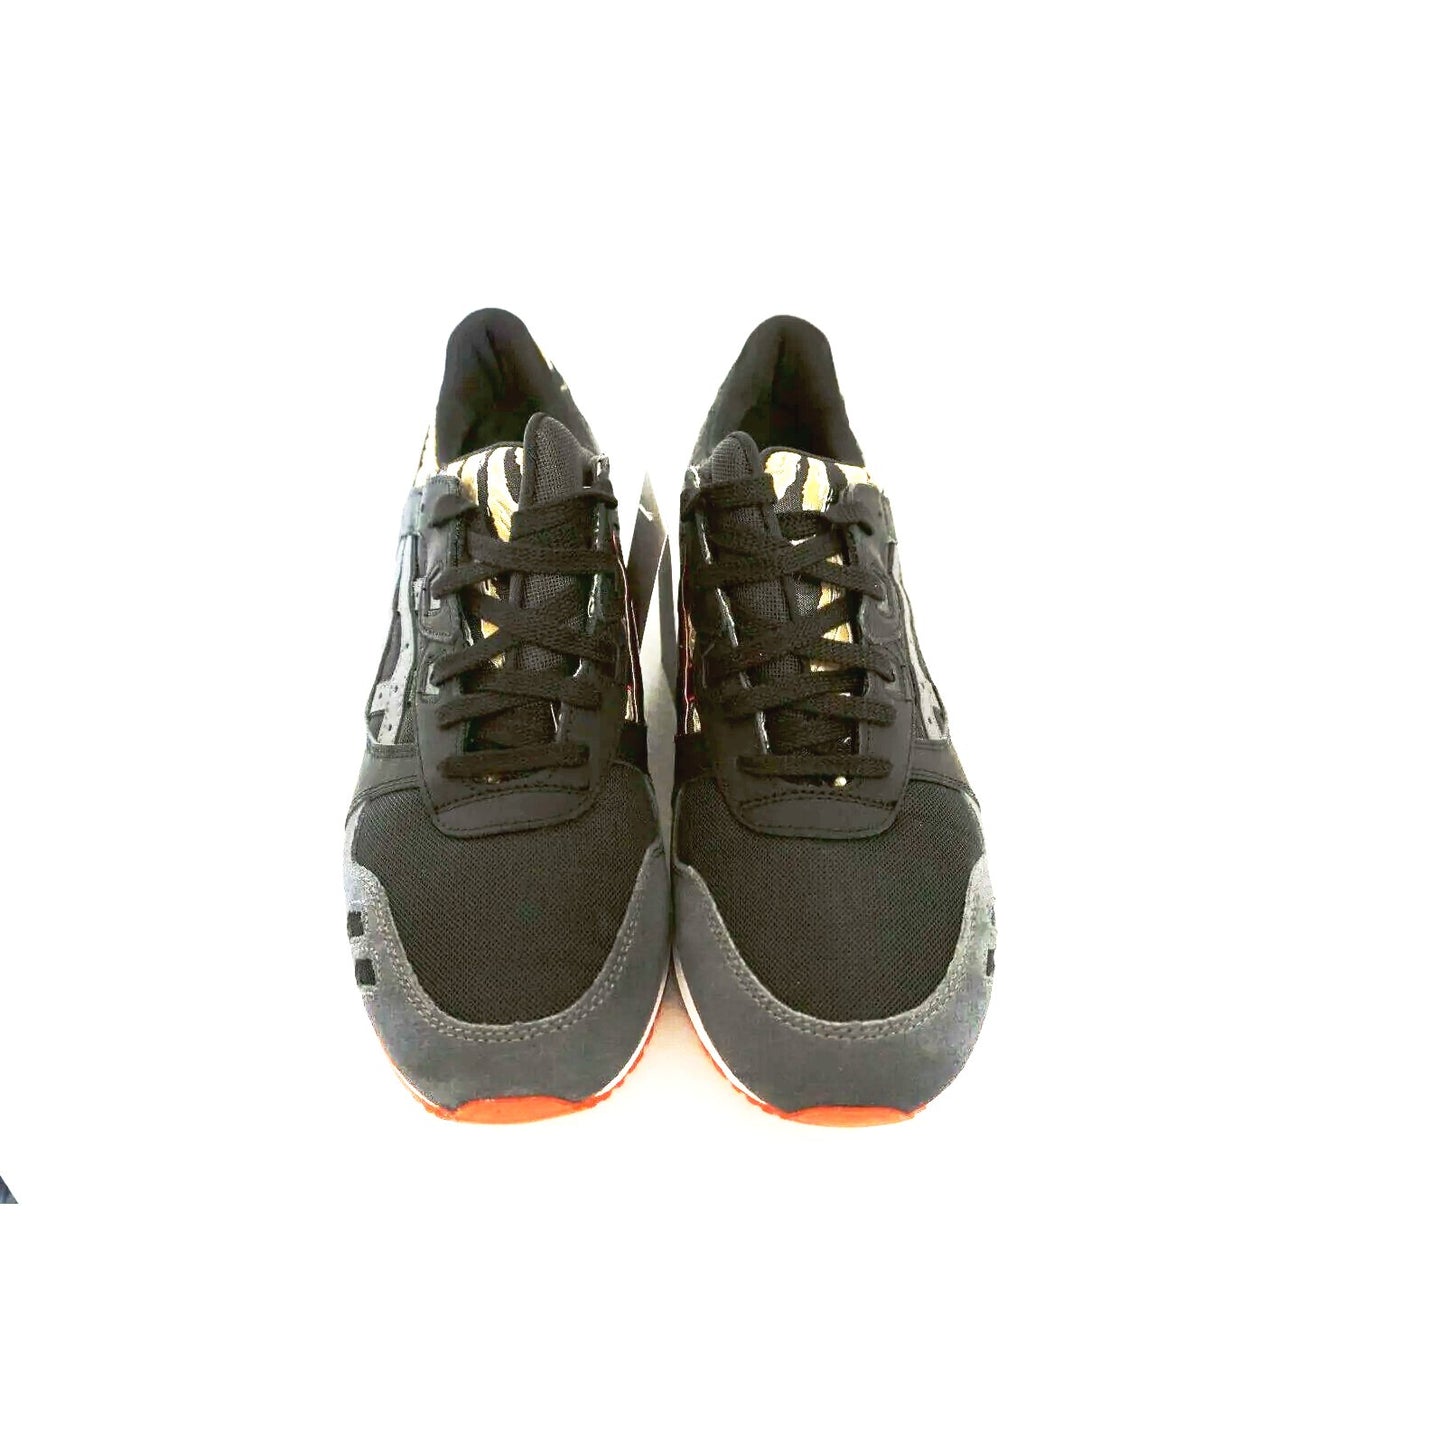 Asics mens gel lyte iii running shoes tiger black orange size 10.5 us